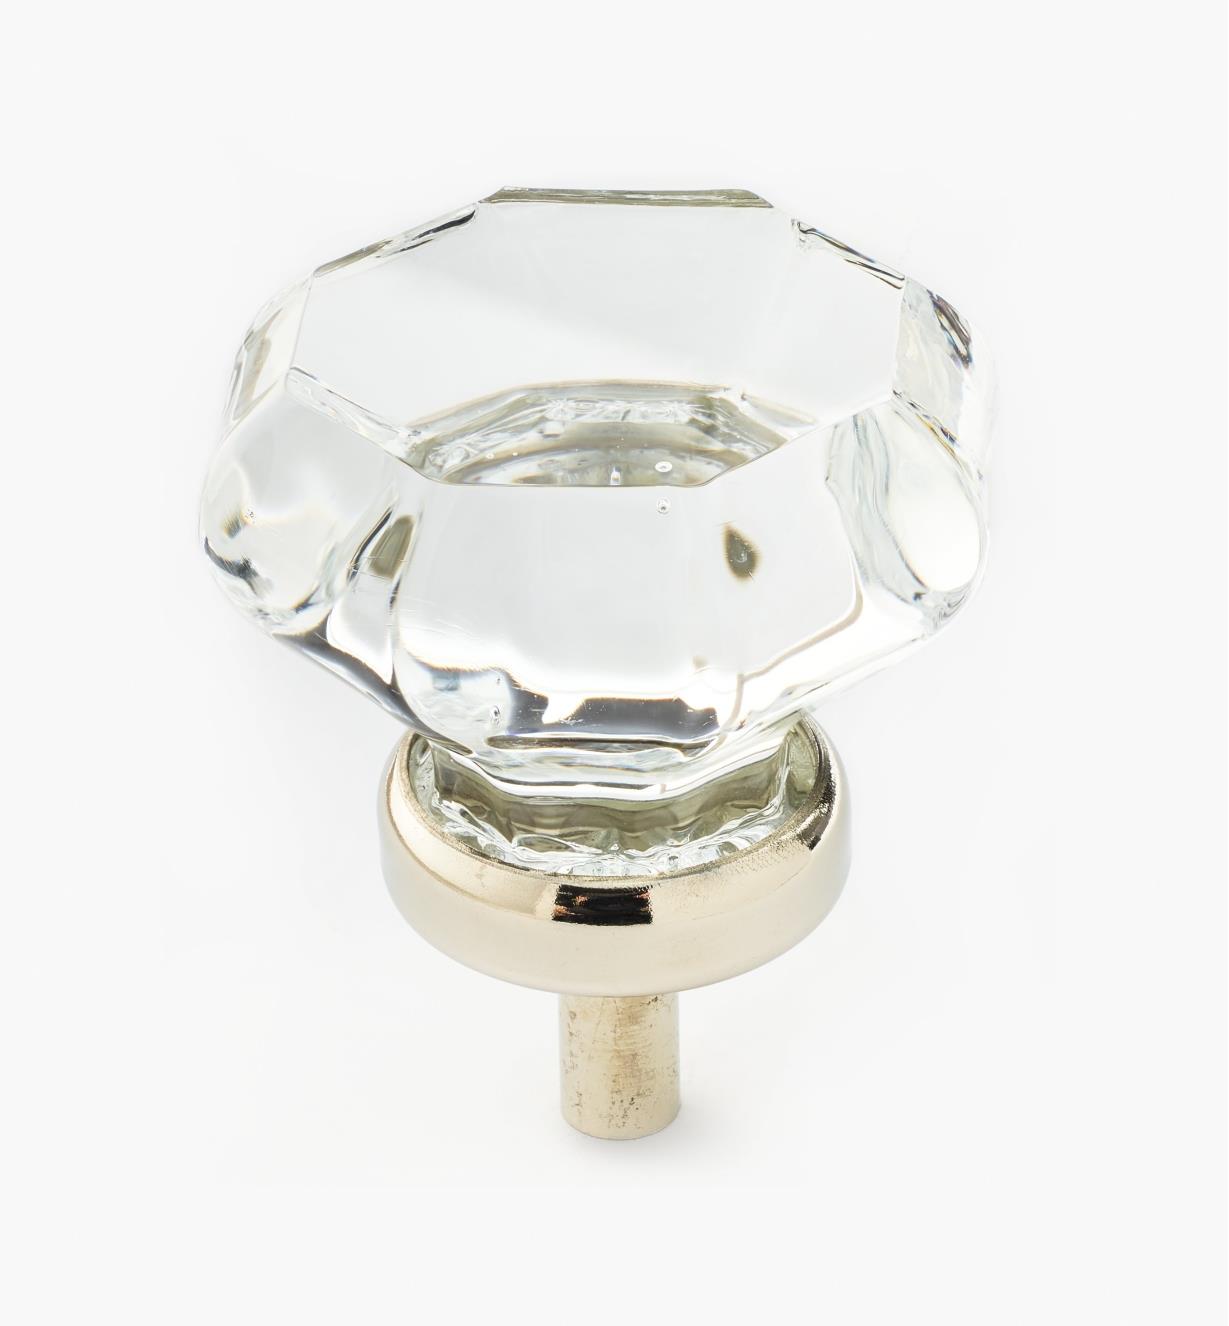 01A3780 - Octagonal Clear Knob, Nickel Plate base